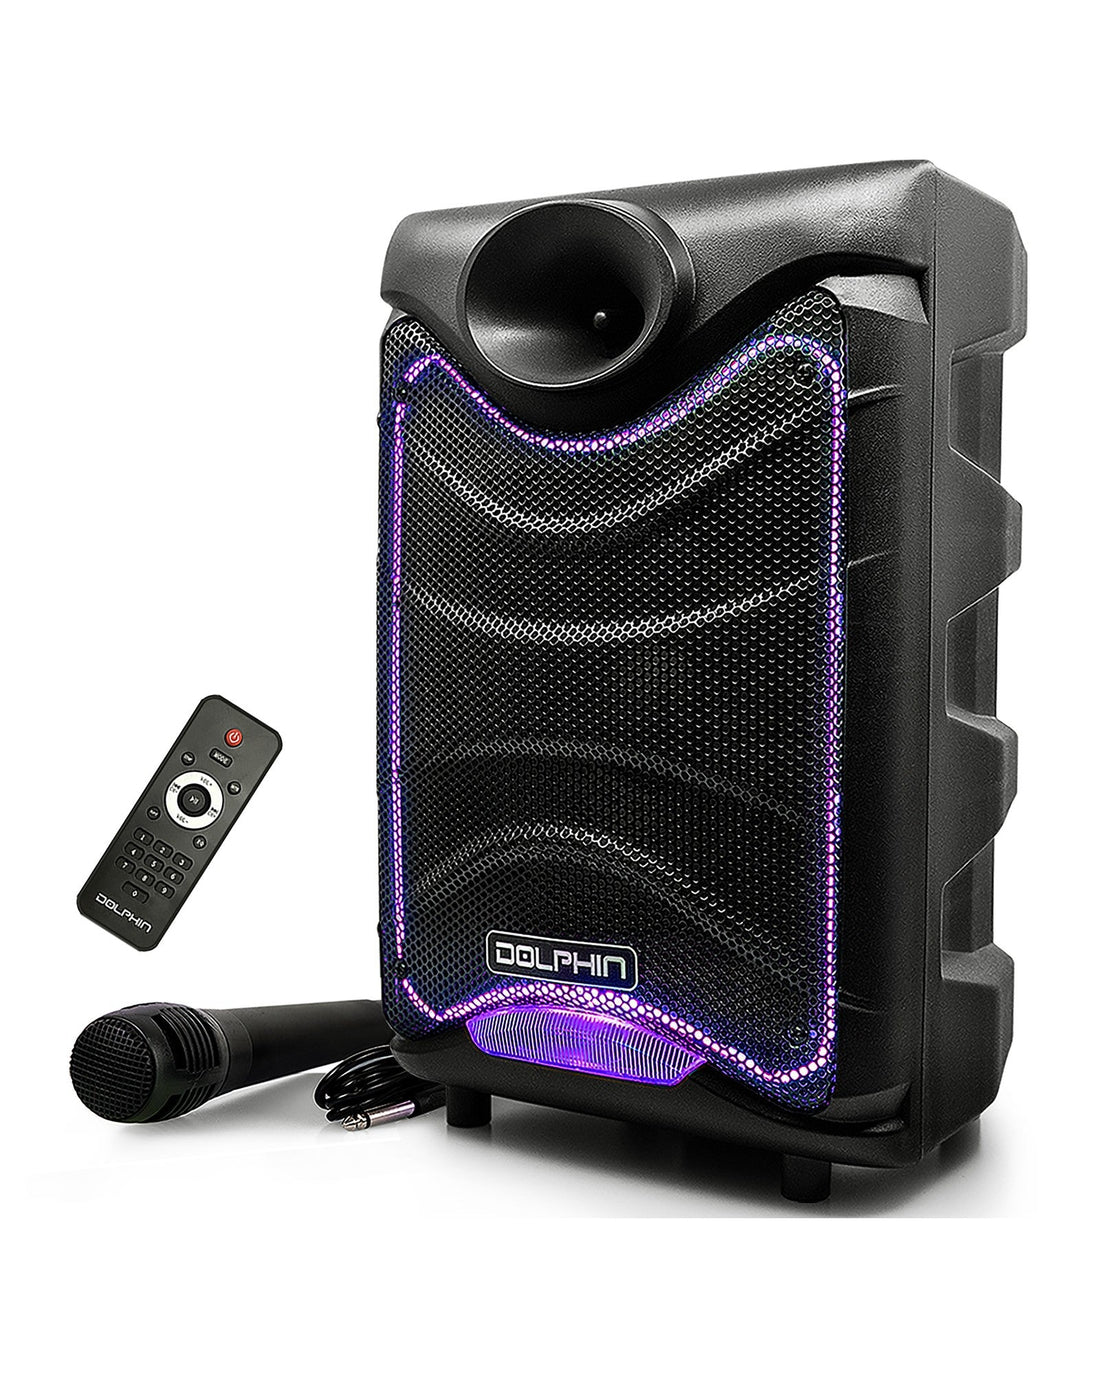 Dolphin SP-850RBT 8” Rechargeable Bluetooth Party Speaker - Top ElectrosSpeakersSP-850RBT850006218240